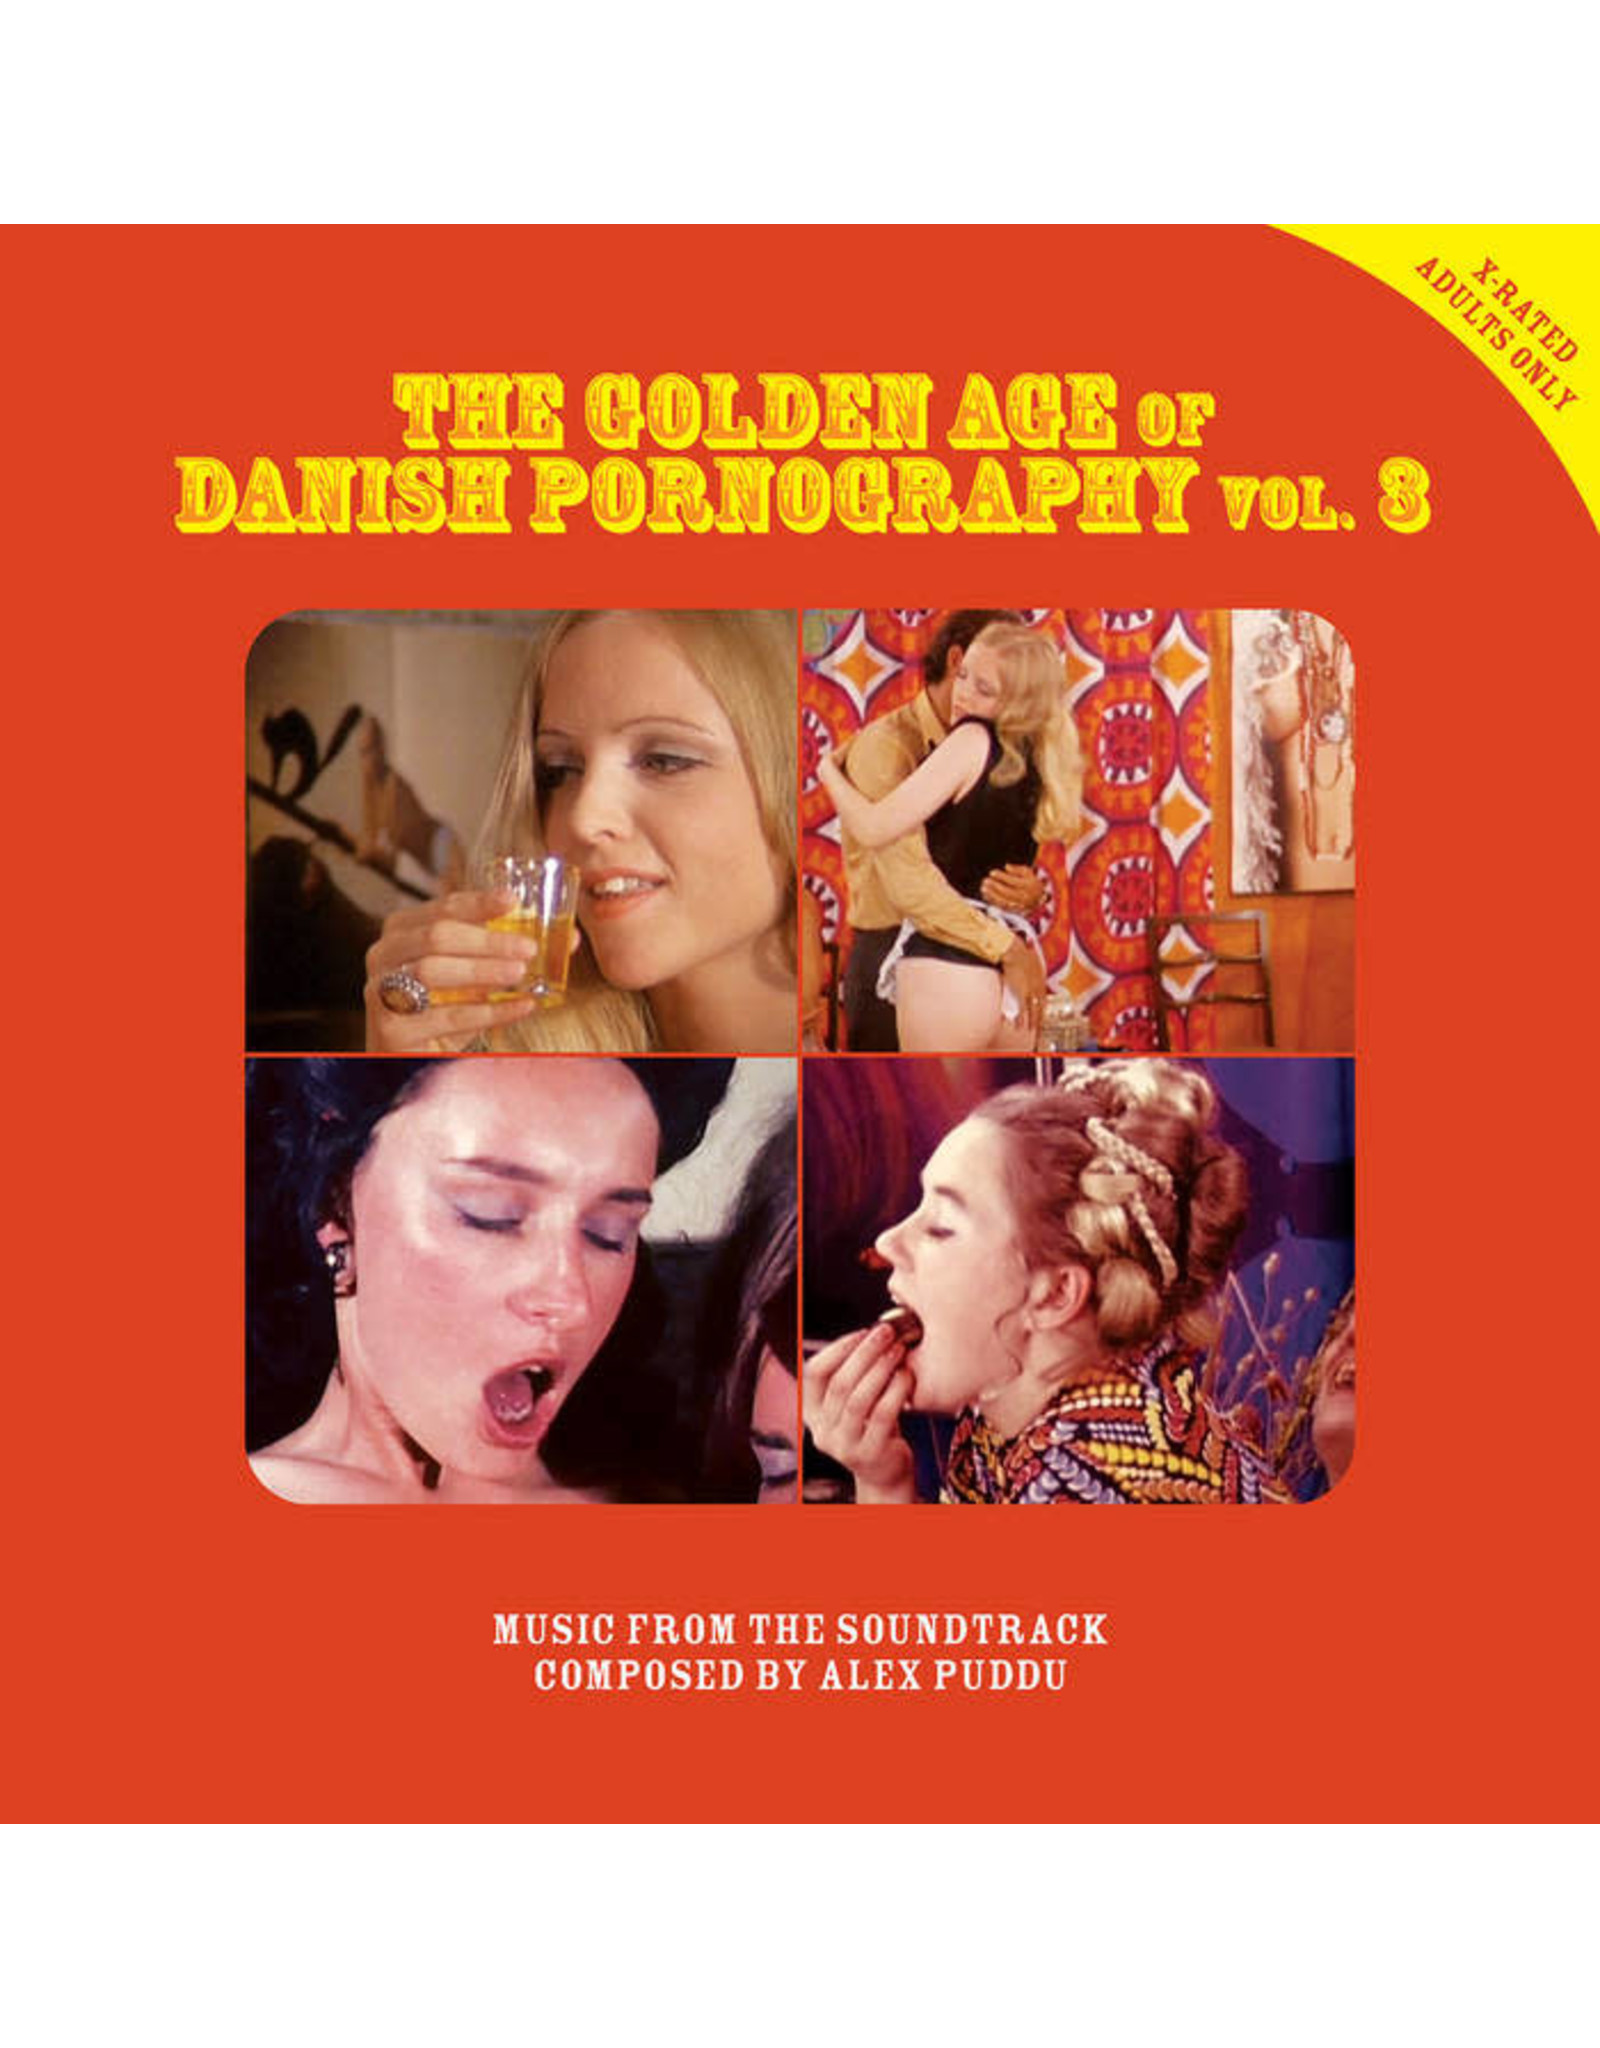 Schema Puddu, Alex: The Golden Age of Danish Pornography Vol. 3 LP